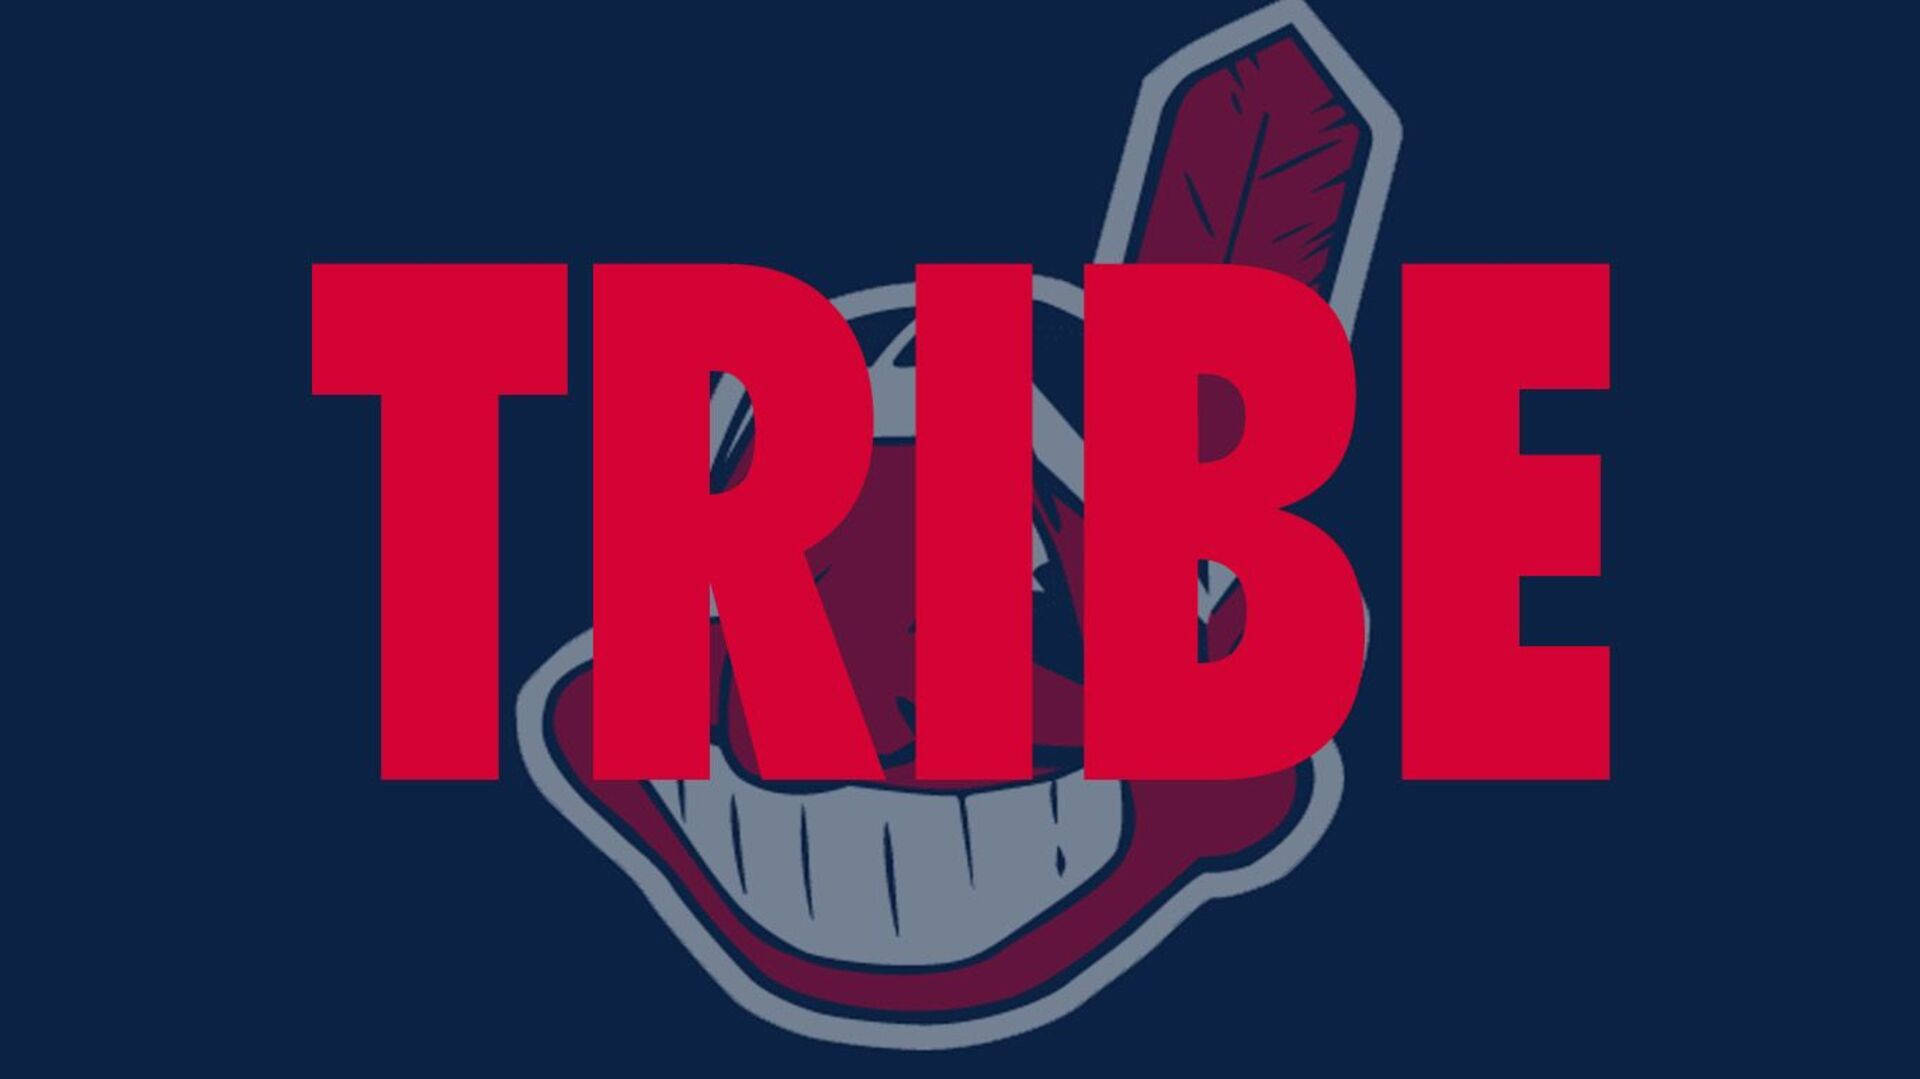 The Cleveland Indians Logo Background